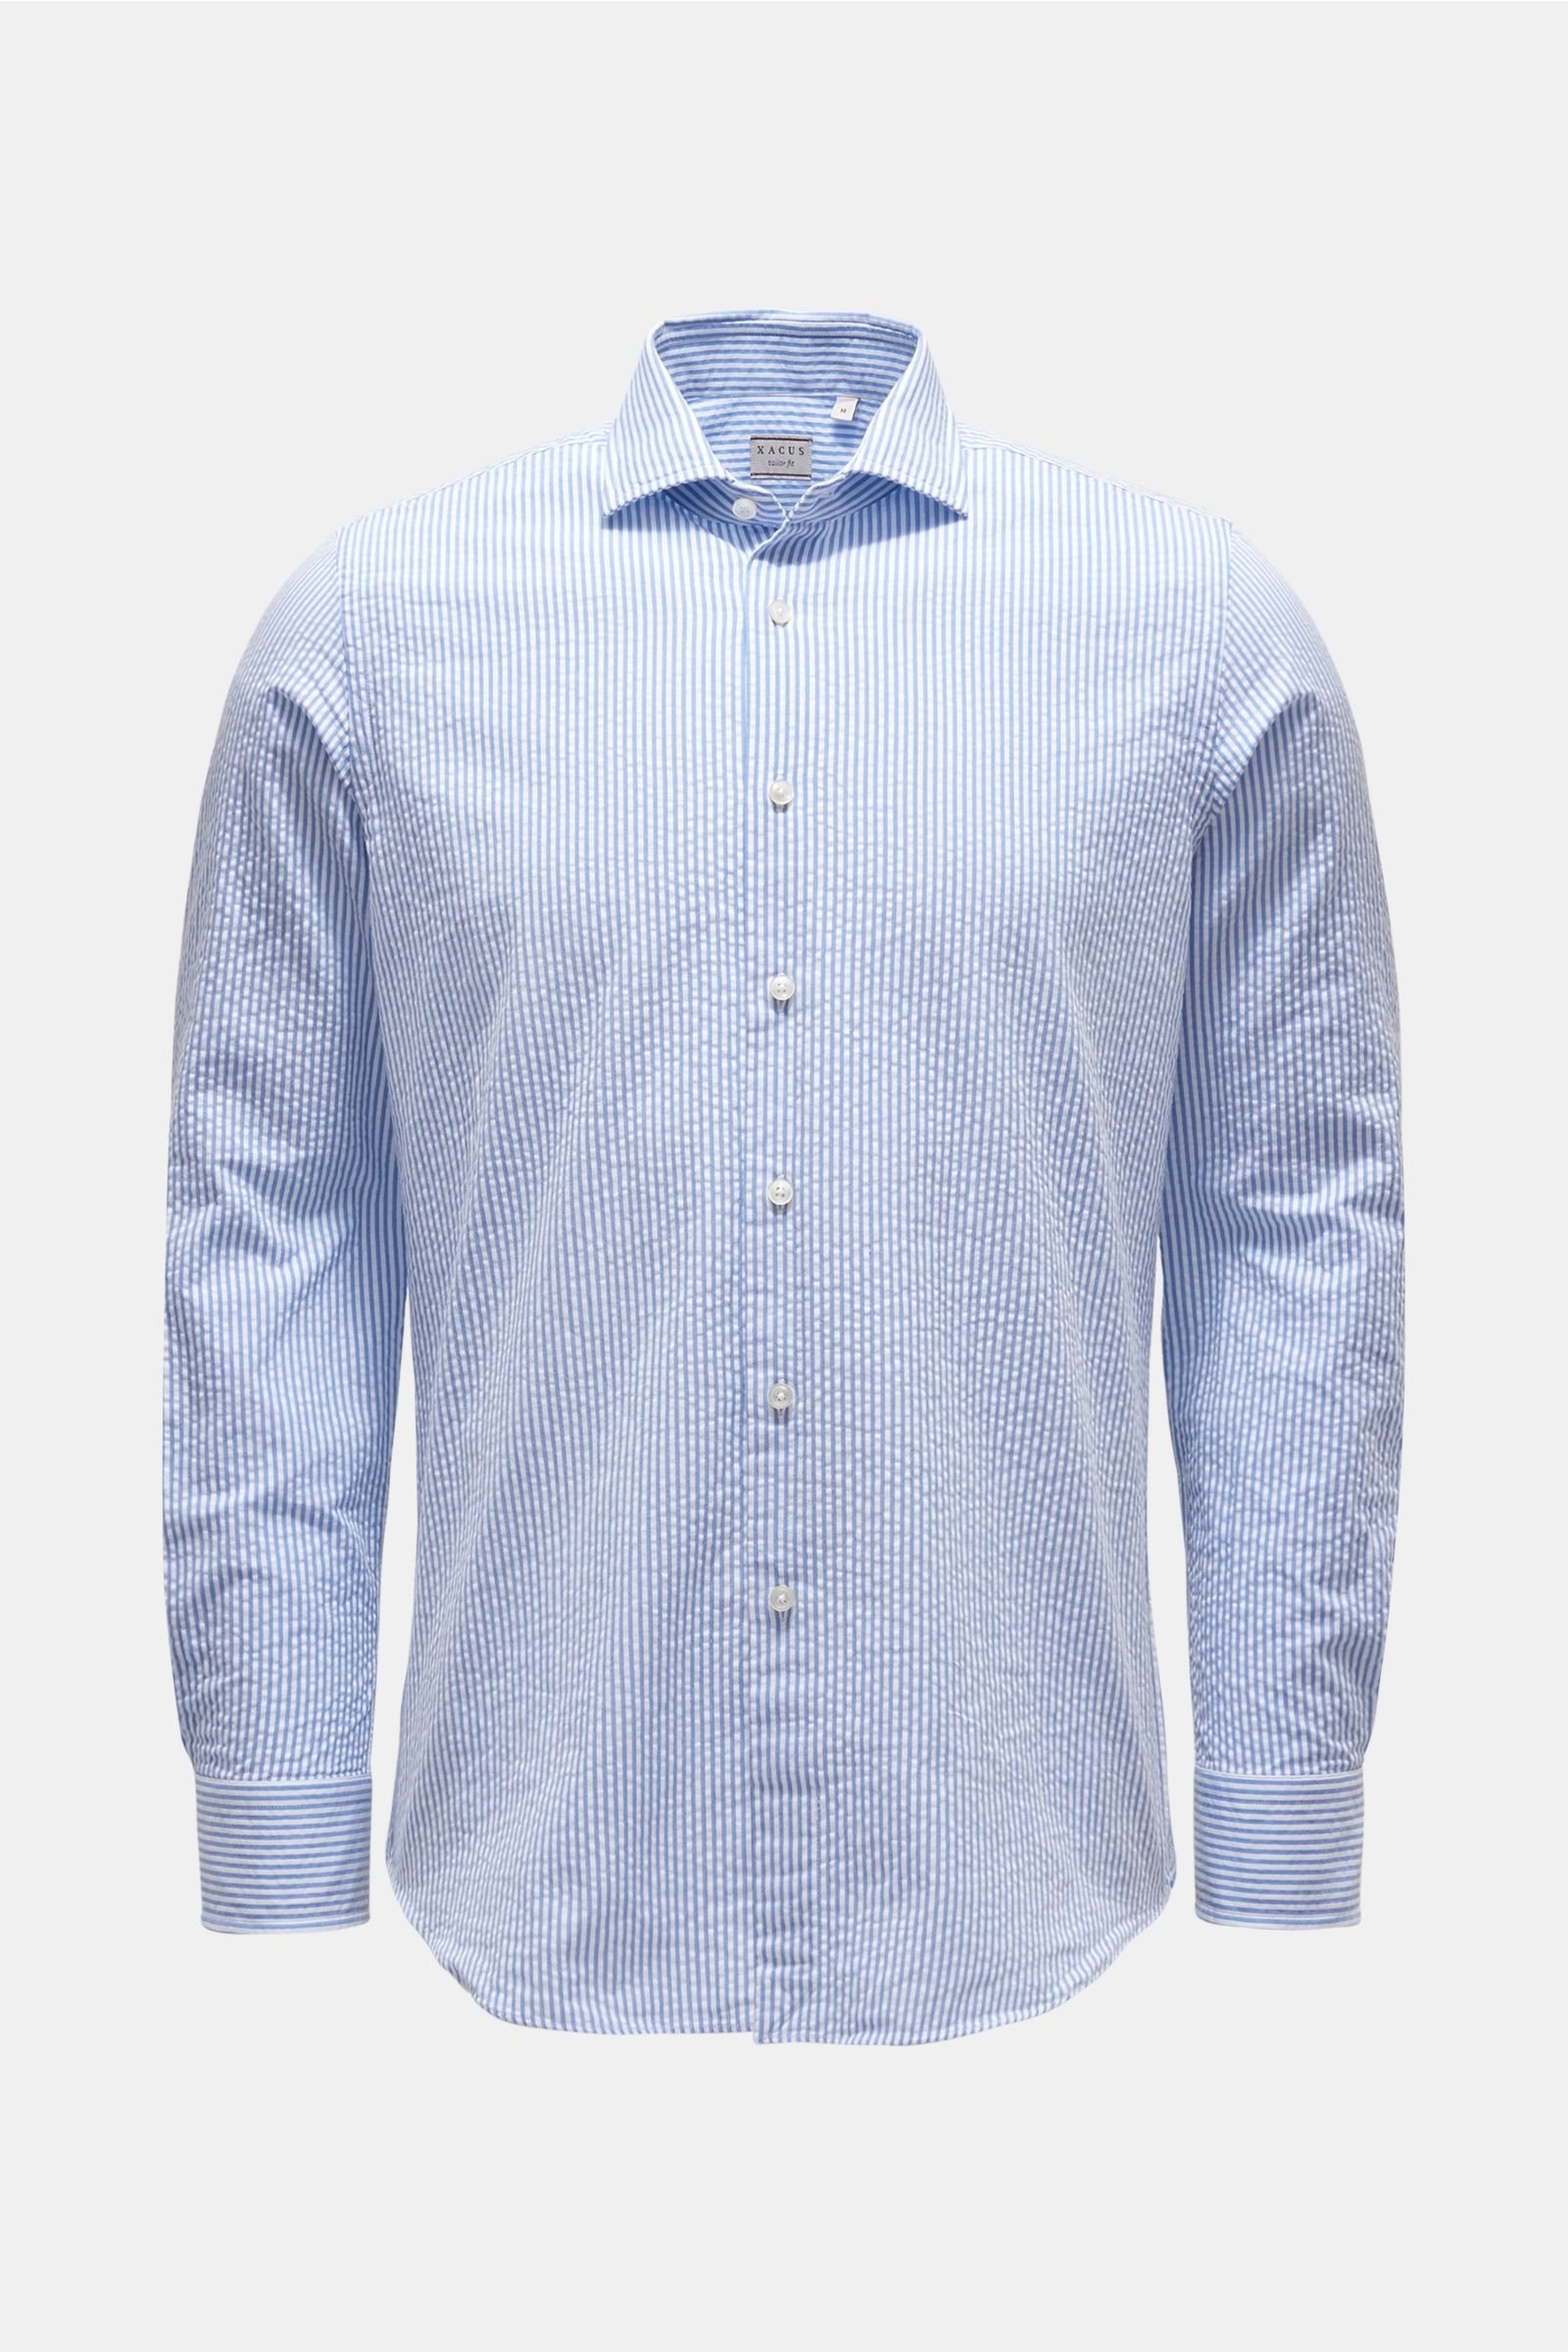 Seersucker shirt 'Tailor Fit' shark collar smoky blue/white striped